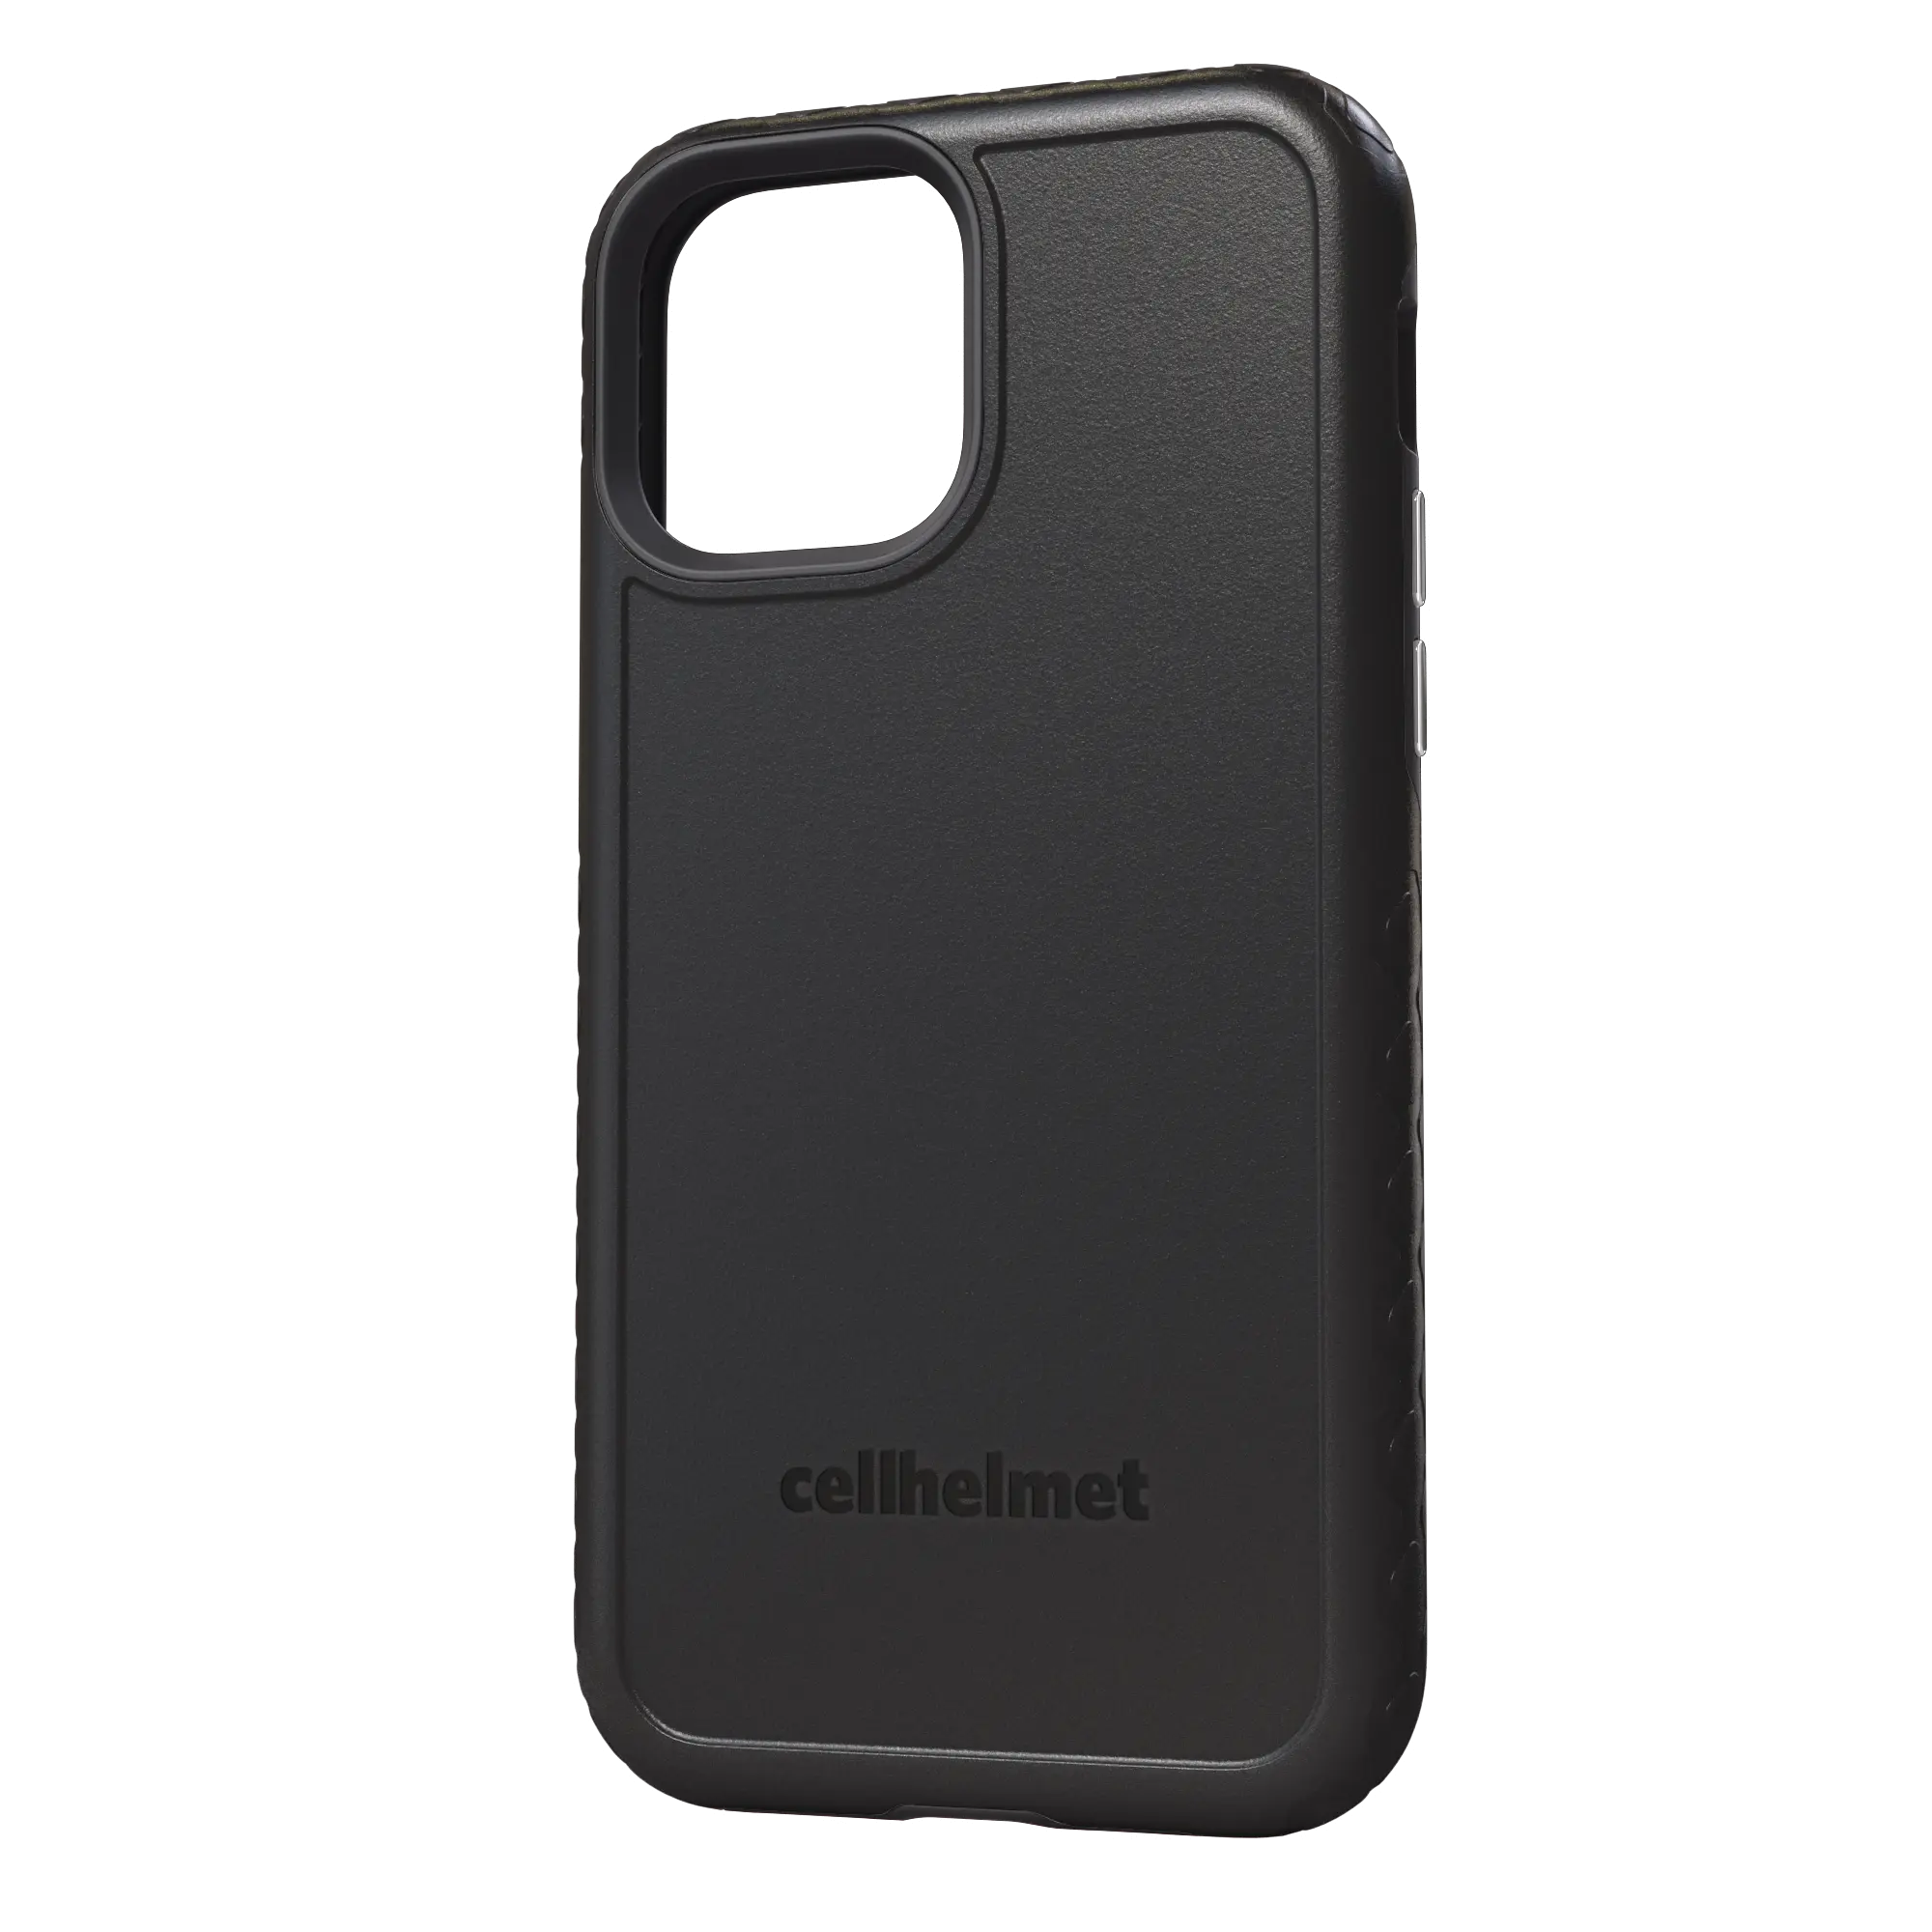 Black cellhelmet Personalized Case for iPhone 12 Pro